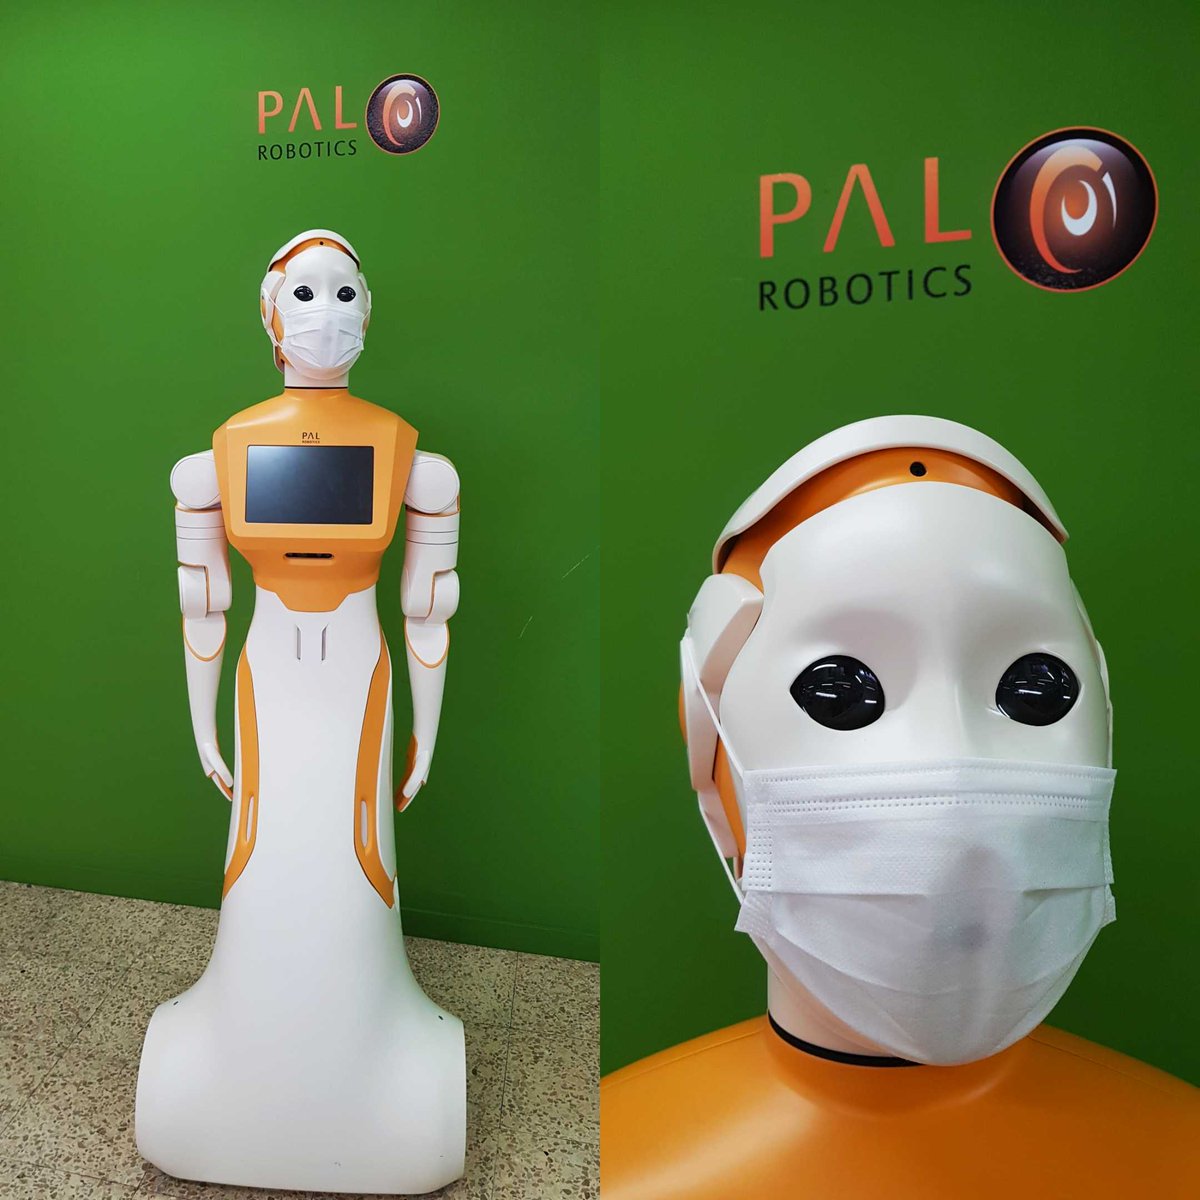 PAL Robotics on Twitter: "Happy Friday and do like #ARI does - safe! 🤖😷 #robot #robotics #socialrobot #weekend #friday #collaborative #StayAlert #StaySafe #coronavirus #COVID19 https://t.co/4jSBYpVxIq" Twitter